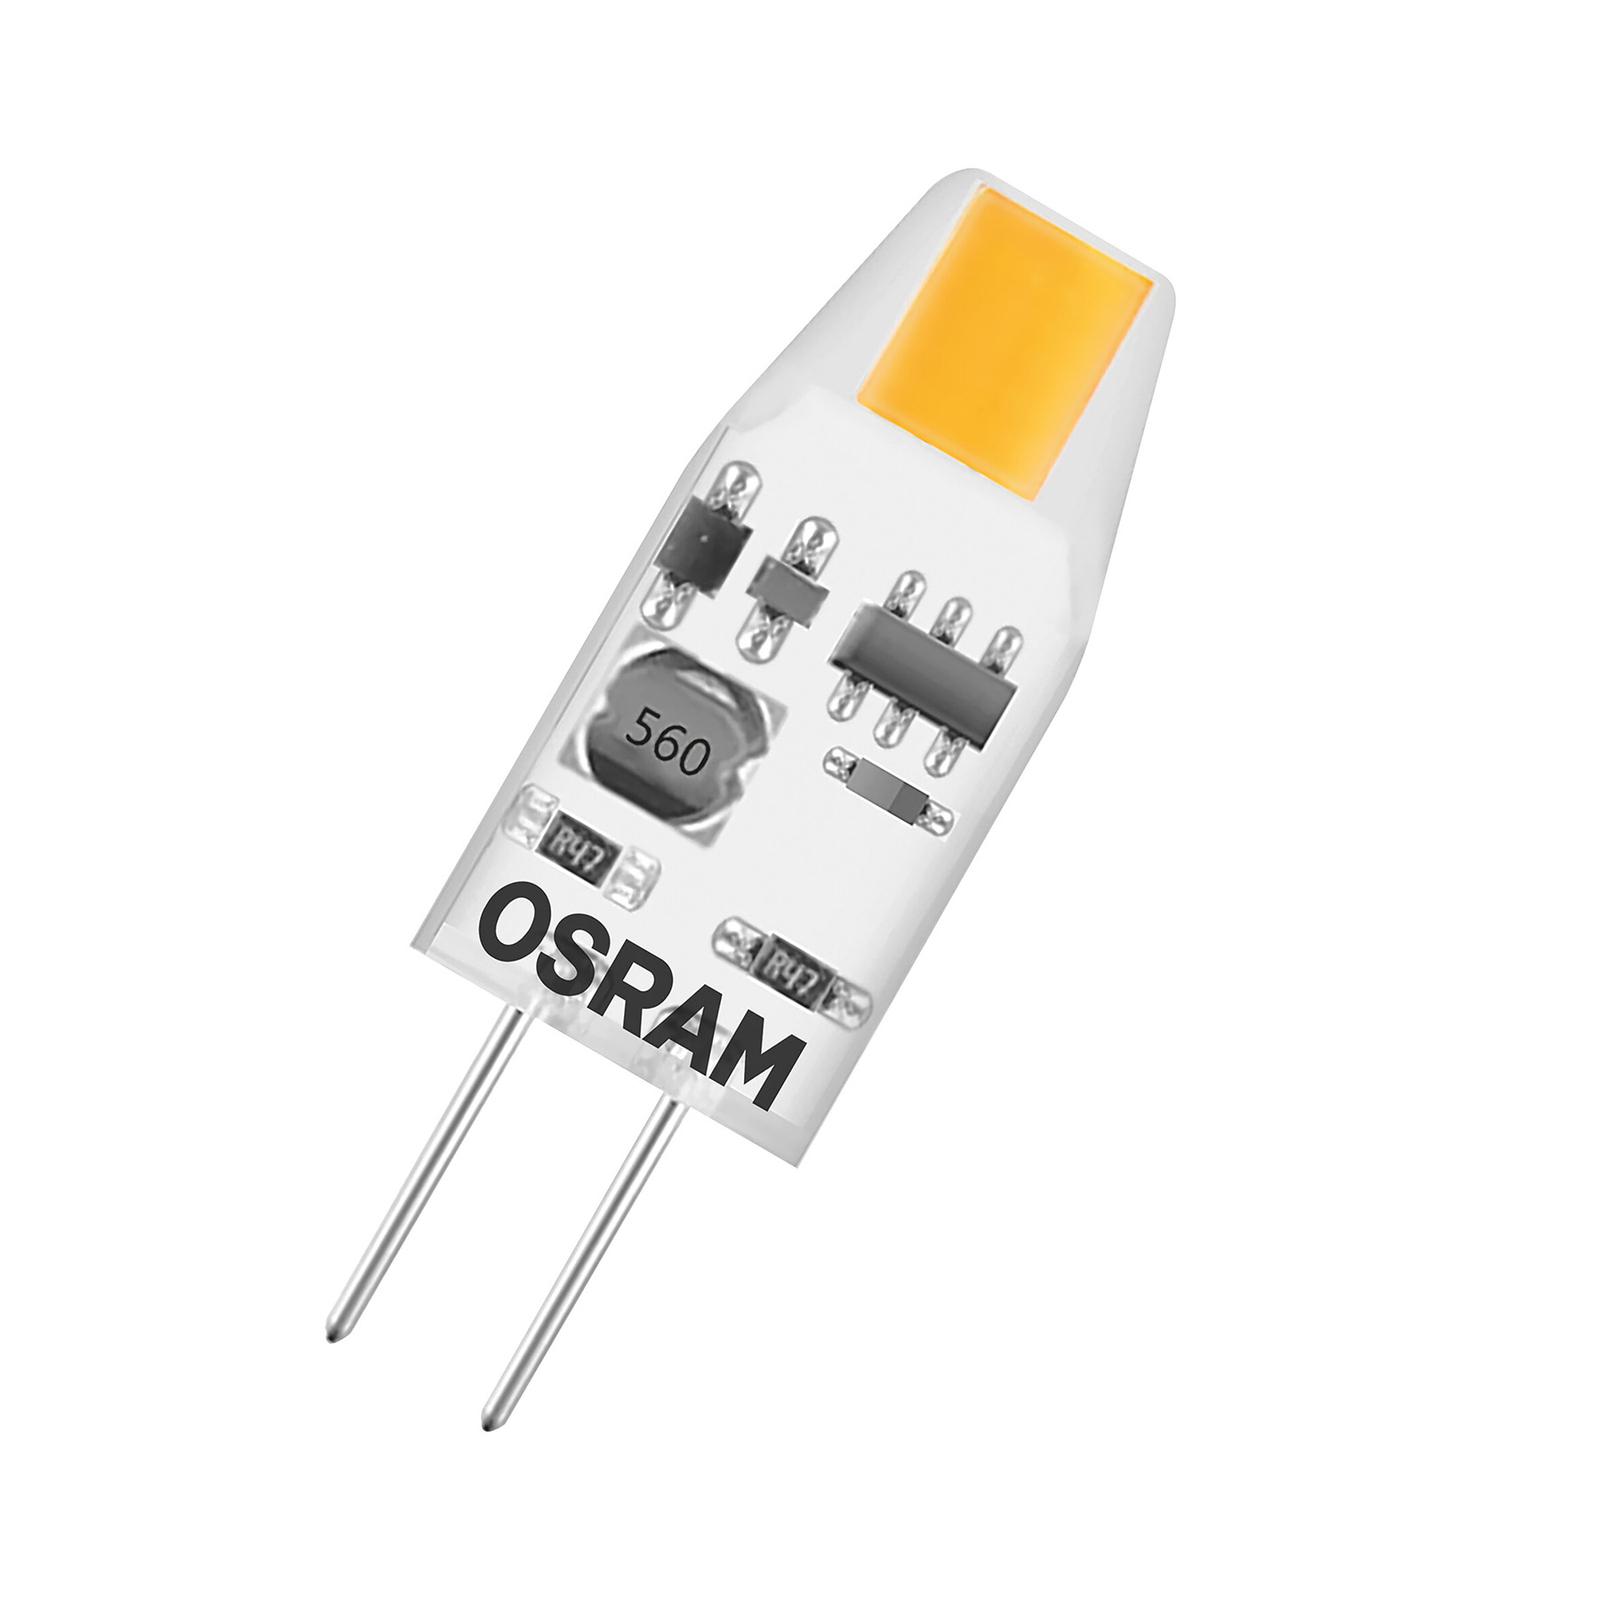 OSRAM PIN Micro sztyft LED G4 1W 100lm 2 700 K